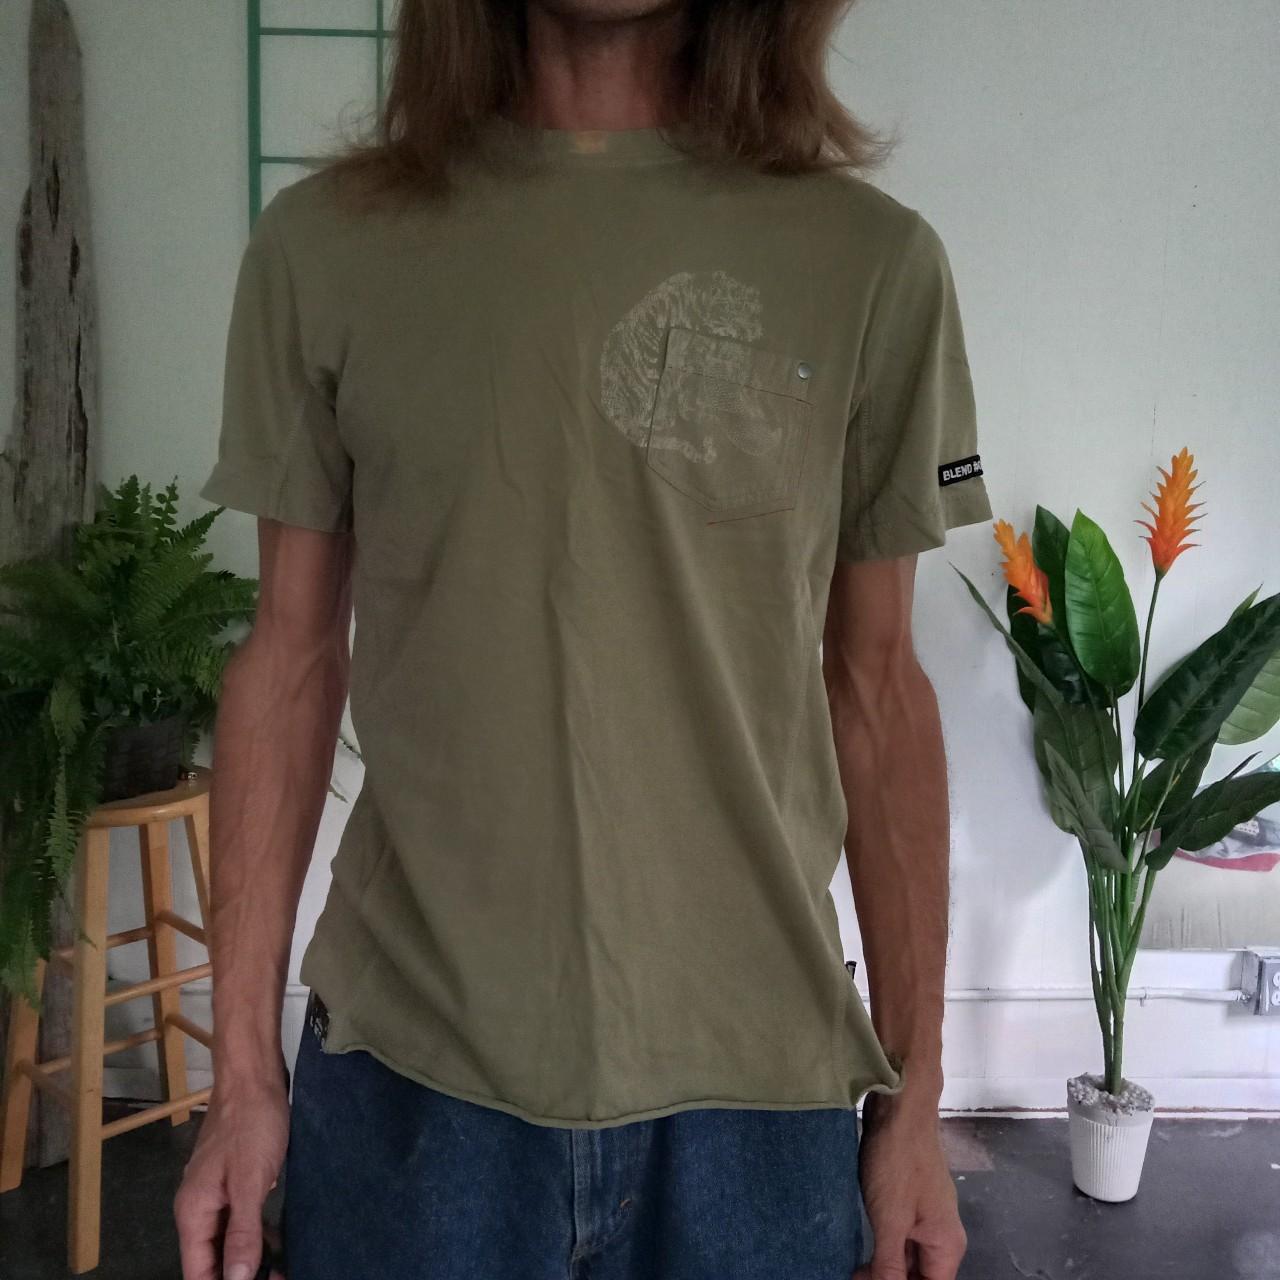 Blend Men's Tan and Green T-shirt (3)